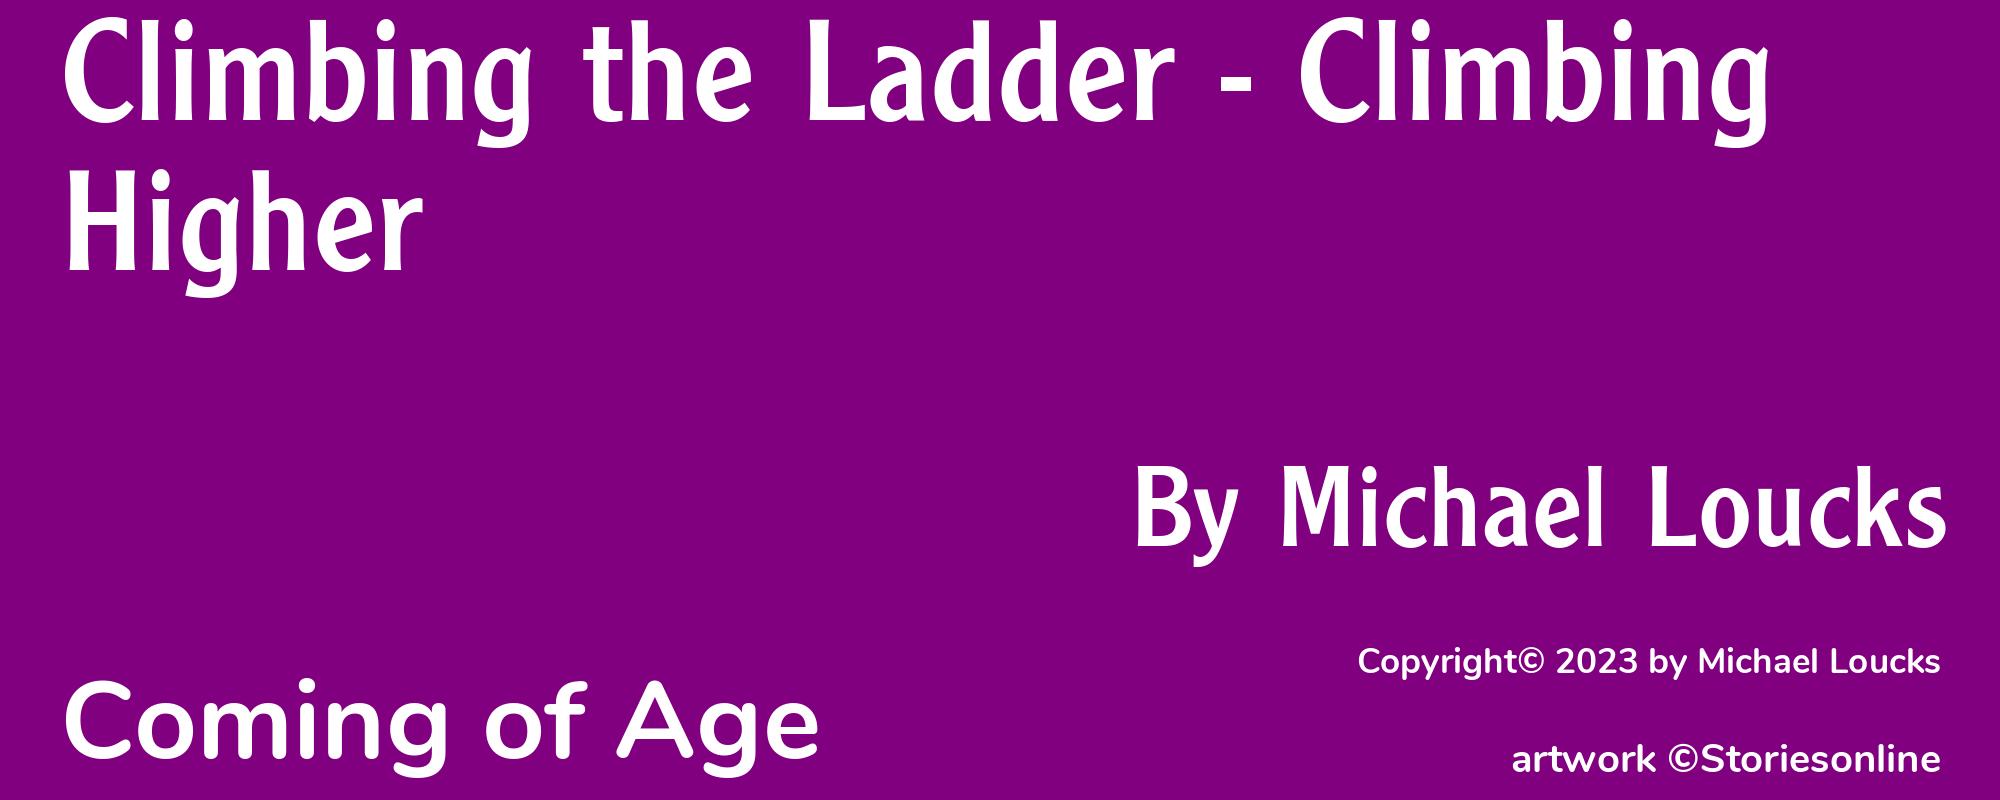 Climbing the Ladder - Climbing Higher - Cover